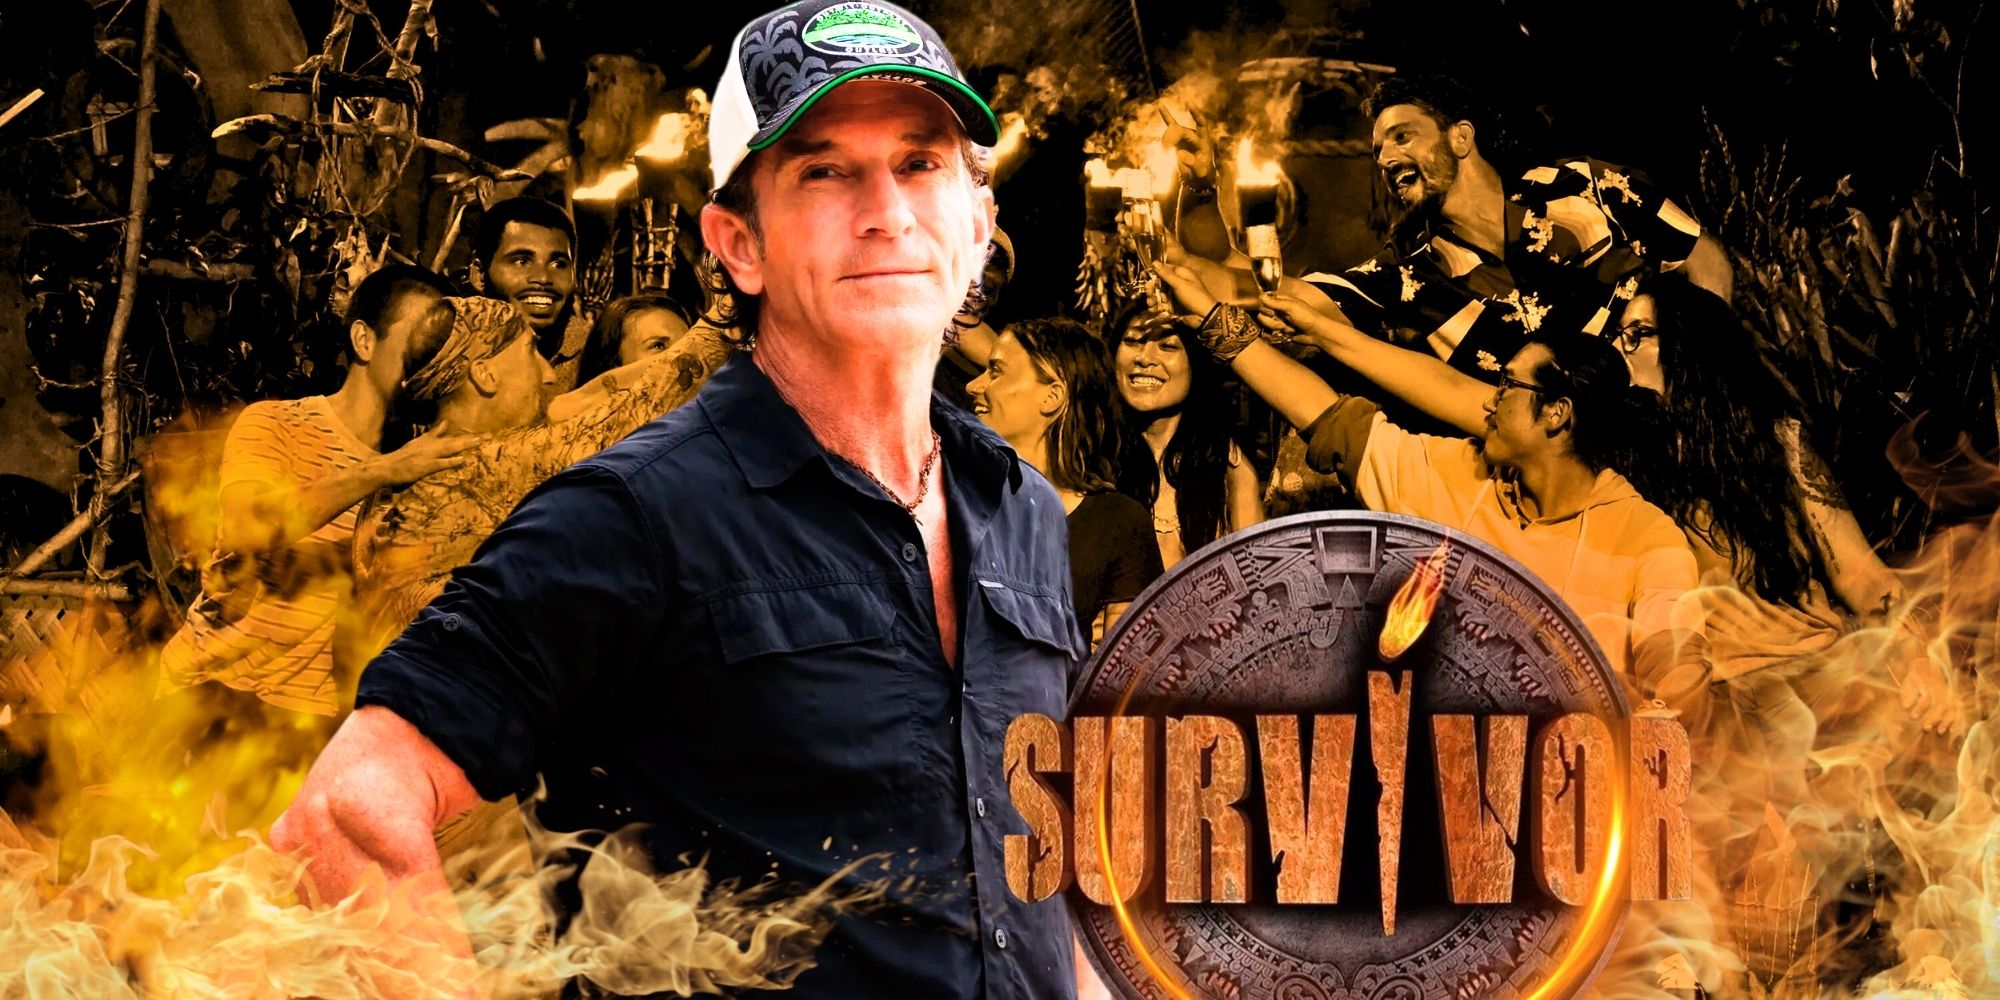 How to Watch Survivor Season 42: Is it Streaming Online?